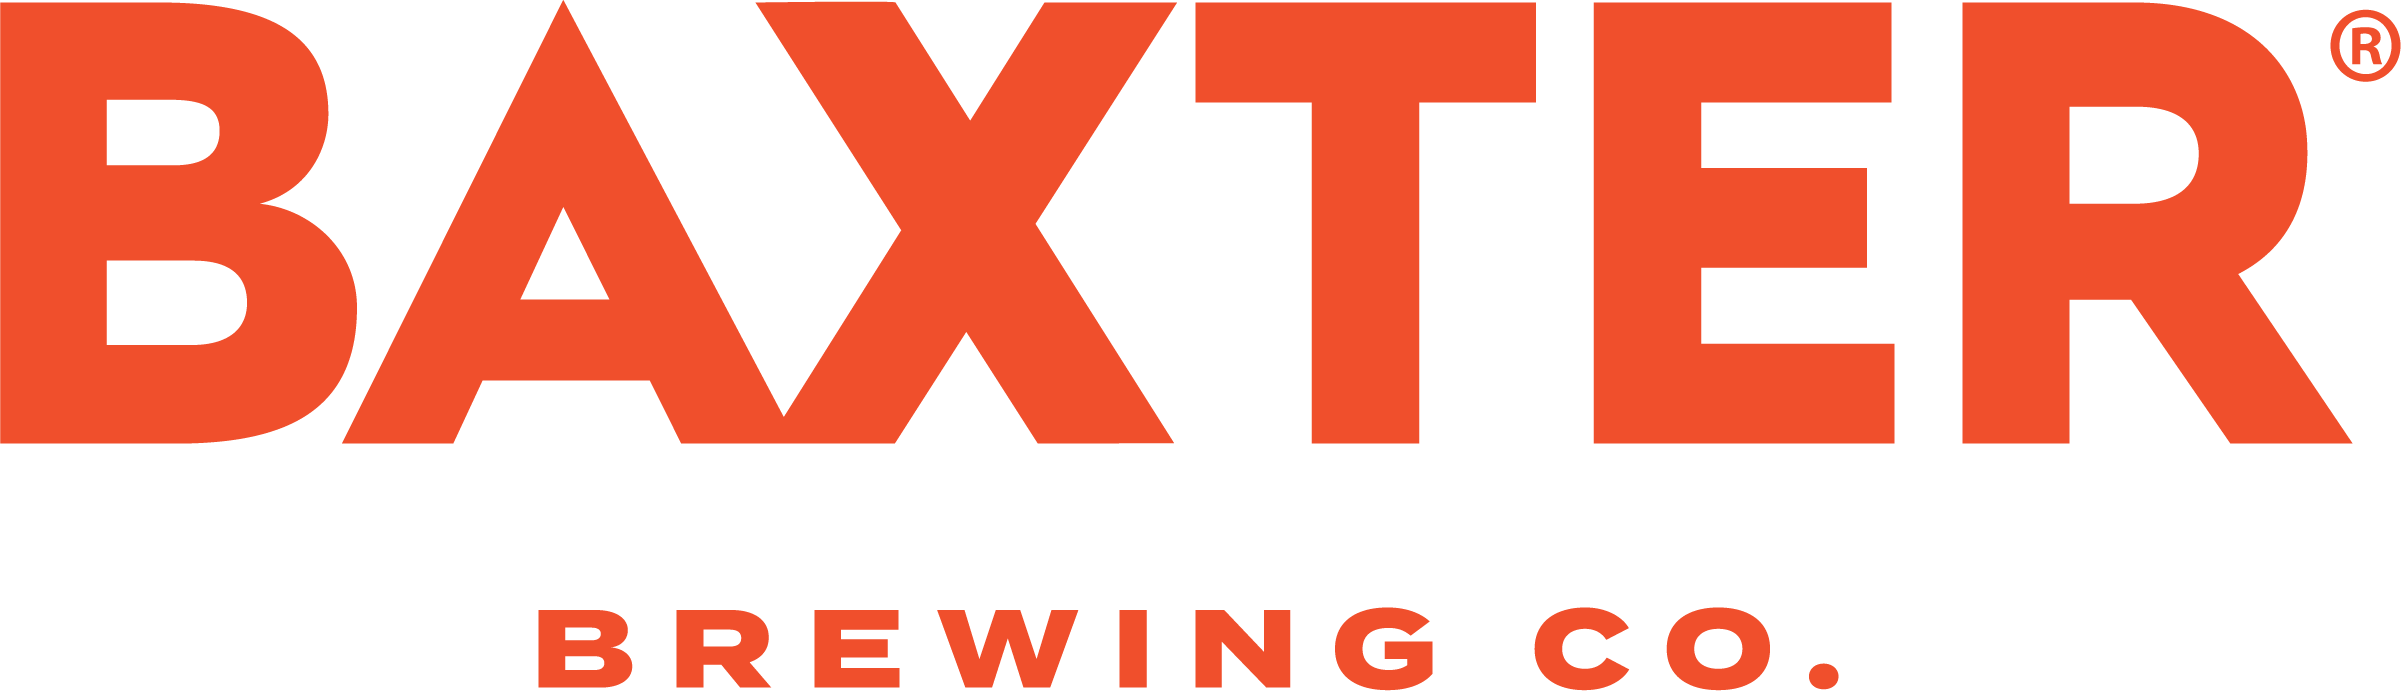 Baxter Logo - Baxter-logo-orange-1 | Baxter Brewing Co.